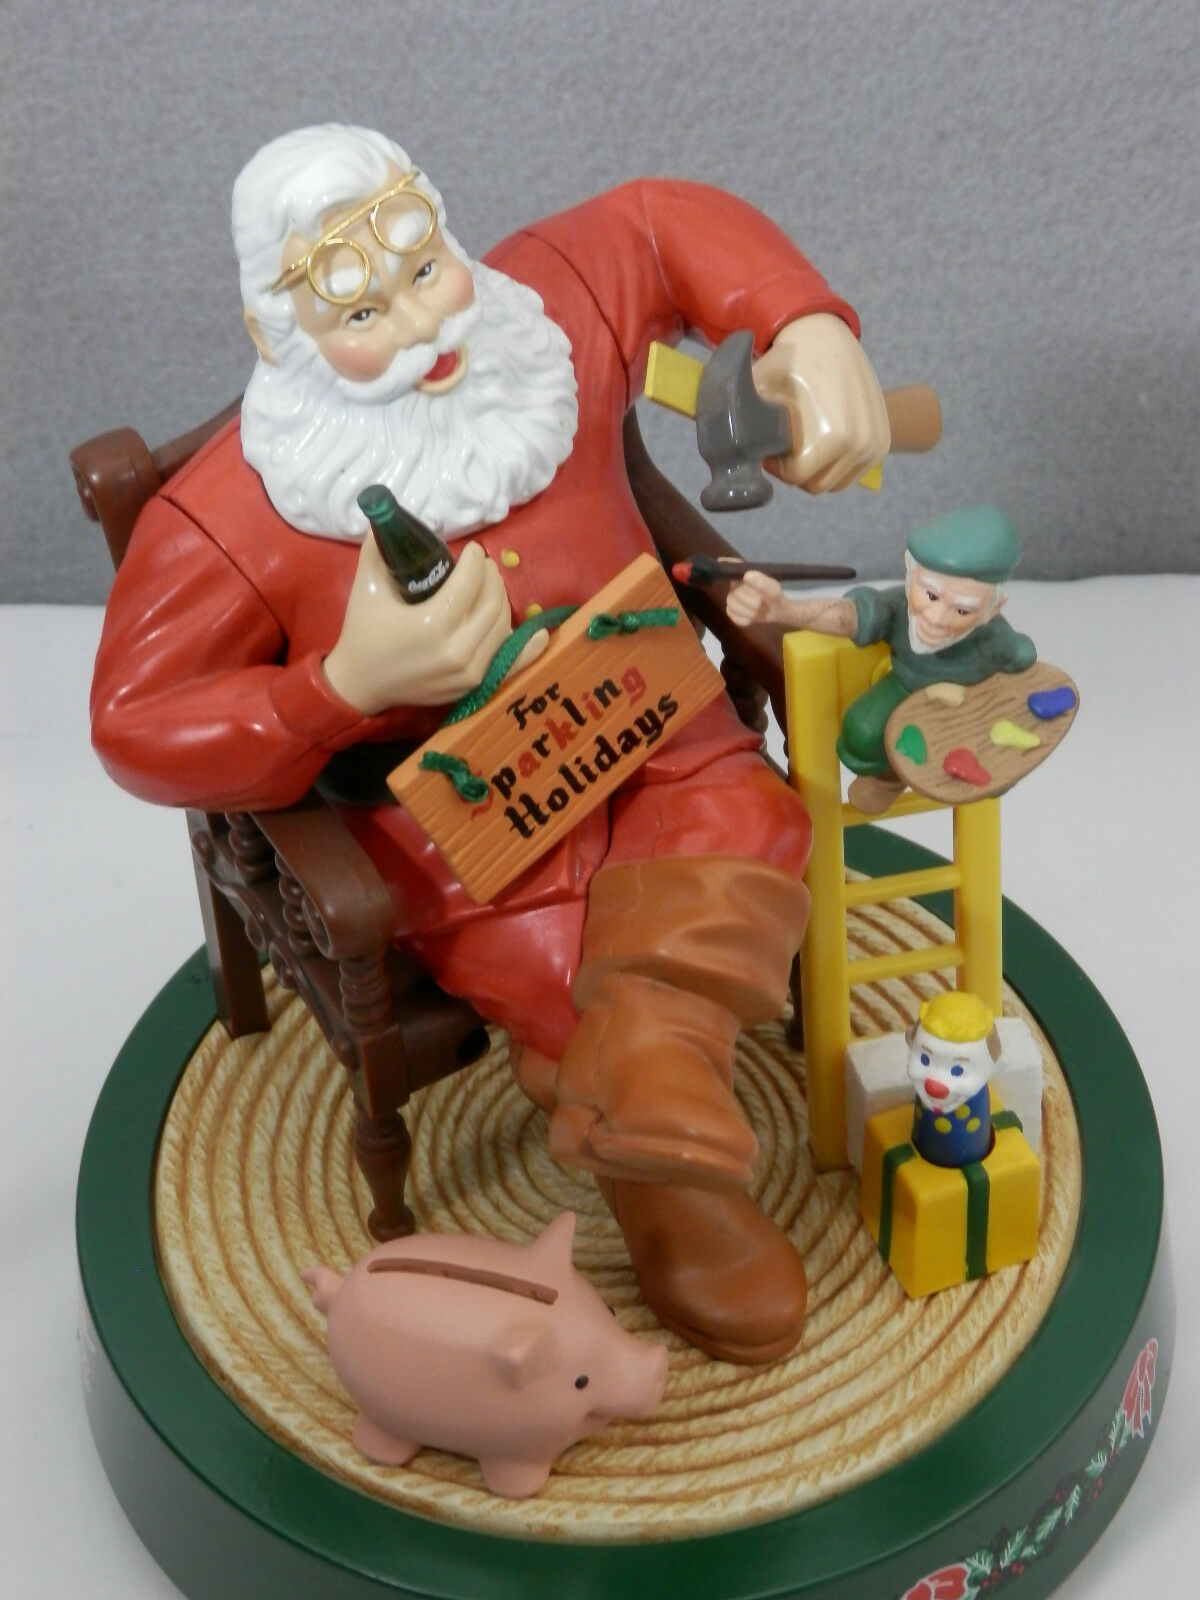 Coca-cola / Ertl Santa Claus Mechanical Bank, 2nd In The Series, 1994